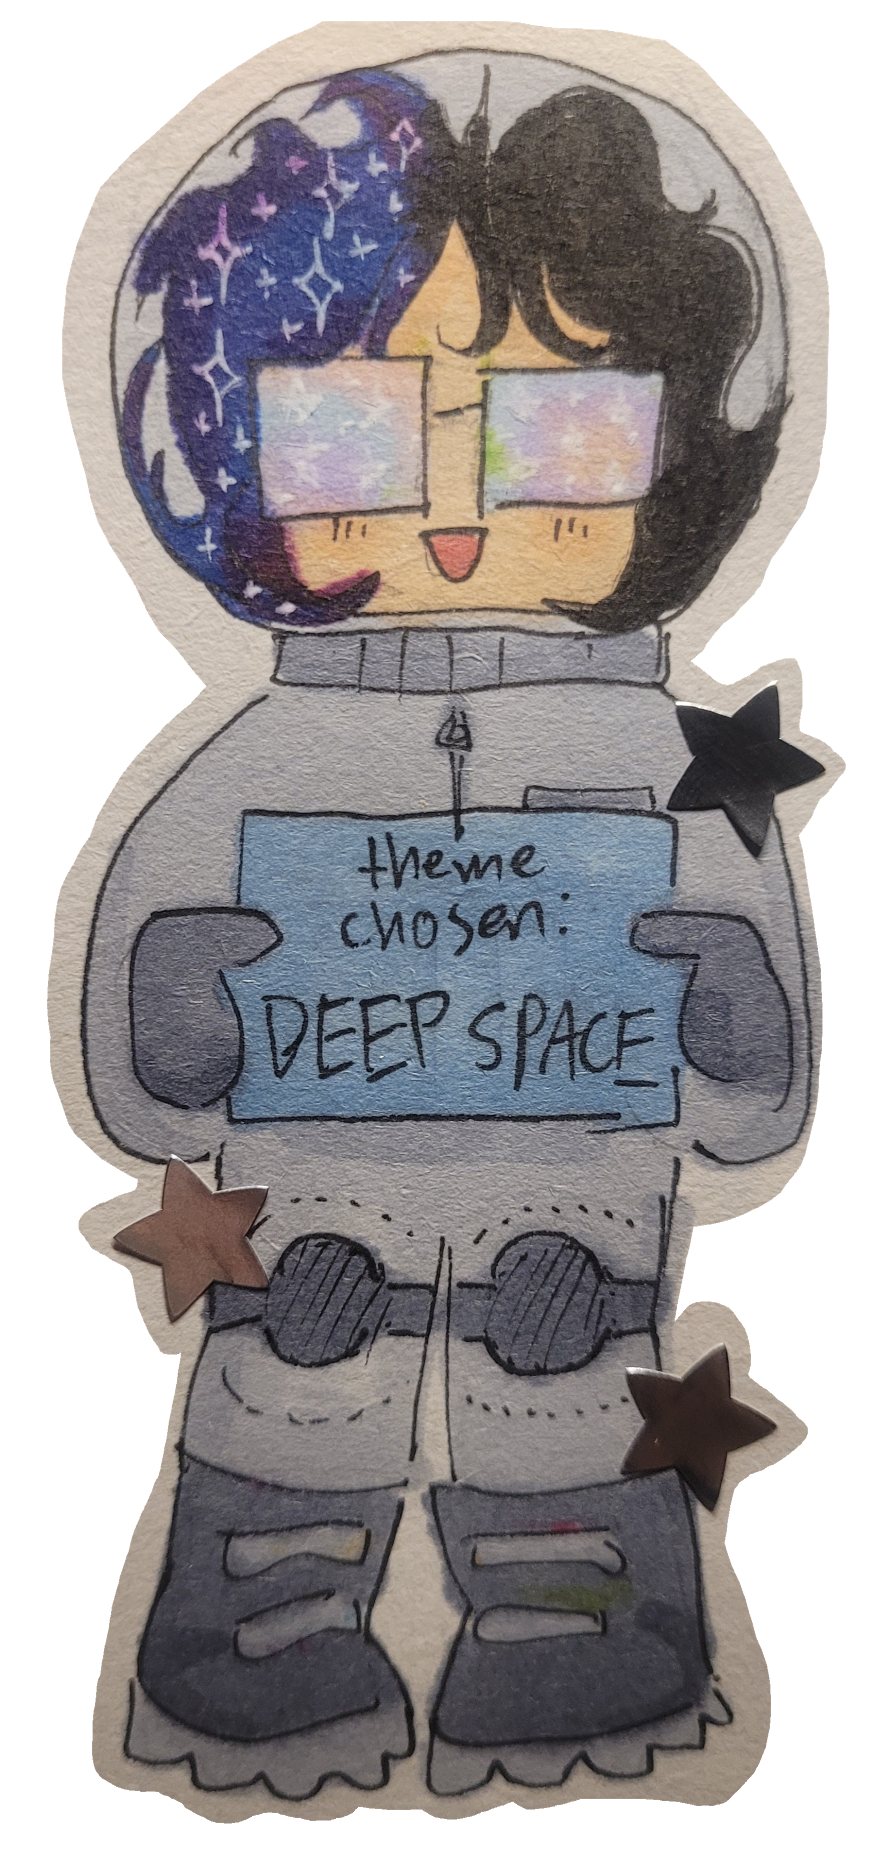 THEME CHOSEN: deep space